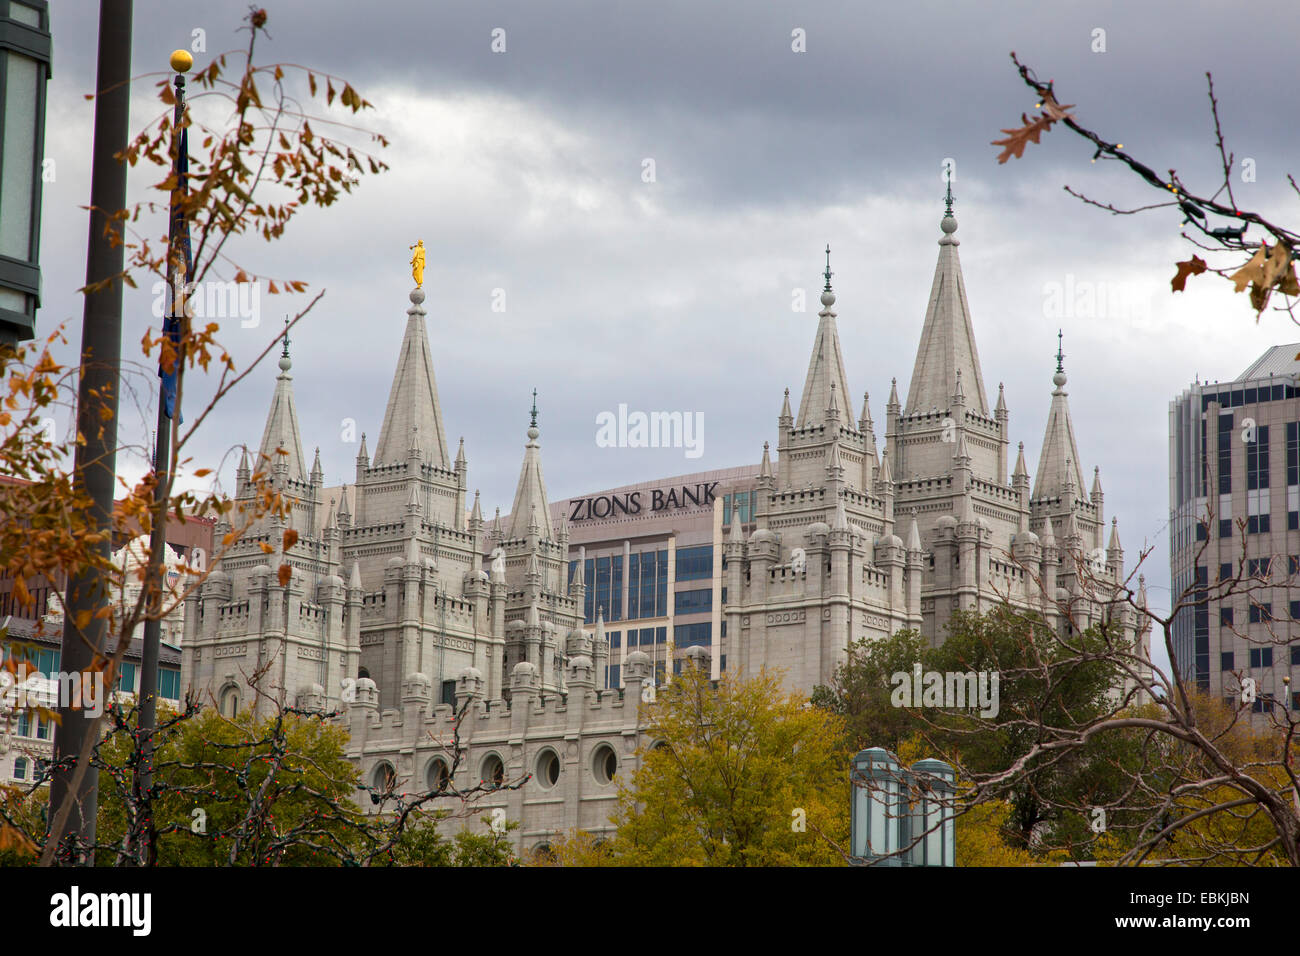 Salt Lake City, Utah - The Salt Lake Temple of the Church of Jesus Christ of Latter Day Saints (Mormons), next to Zions Bank. Stock Photo